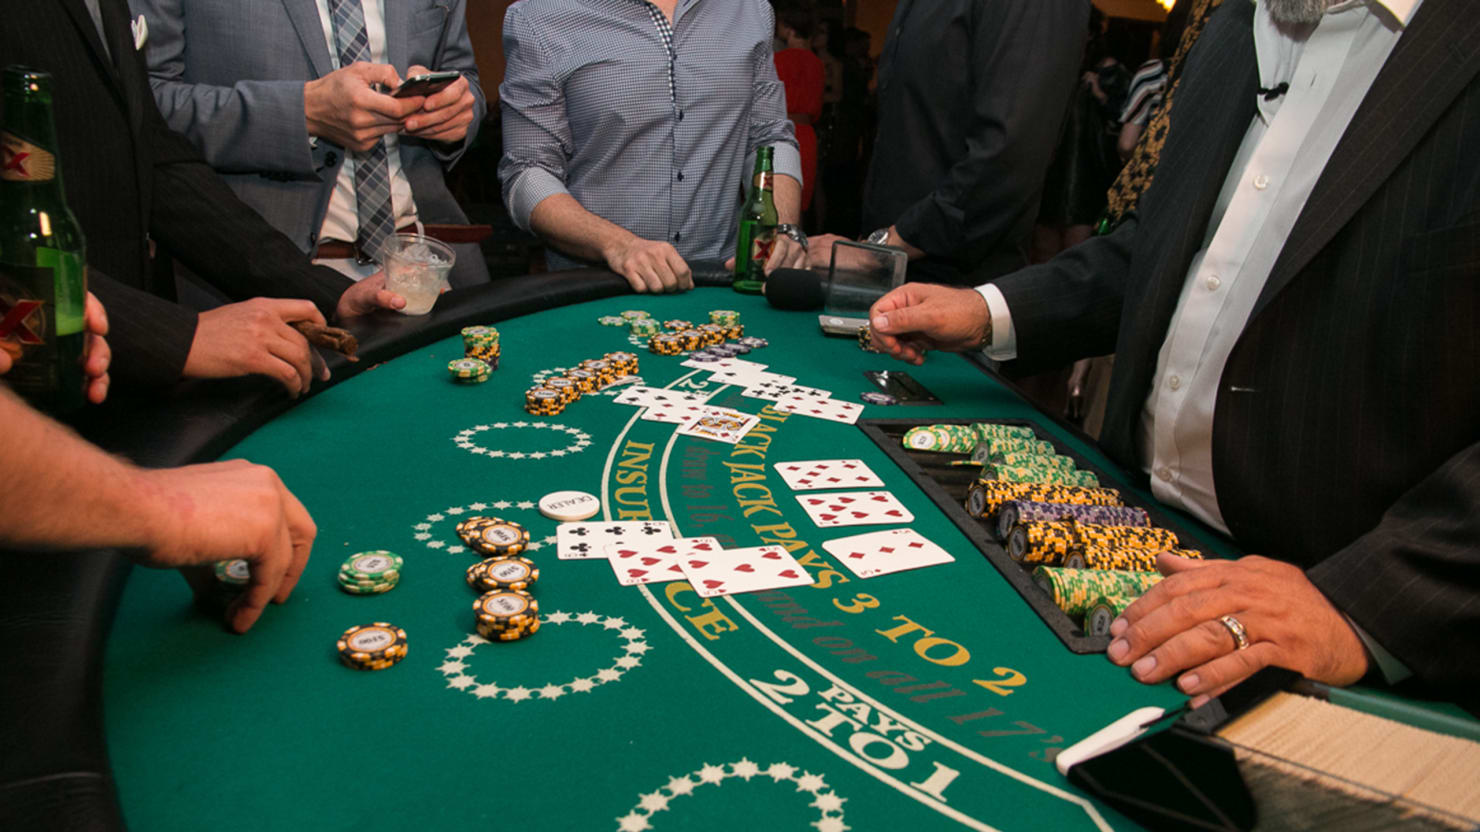 How To Play Blackjack Casino